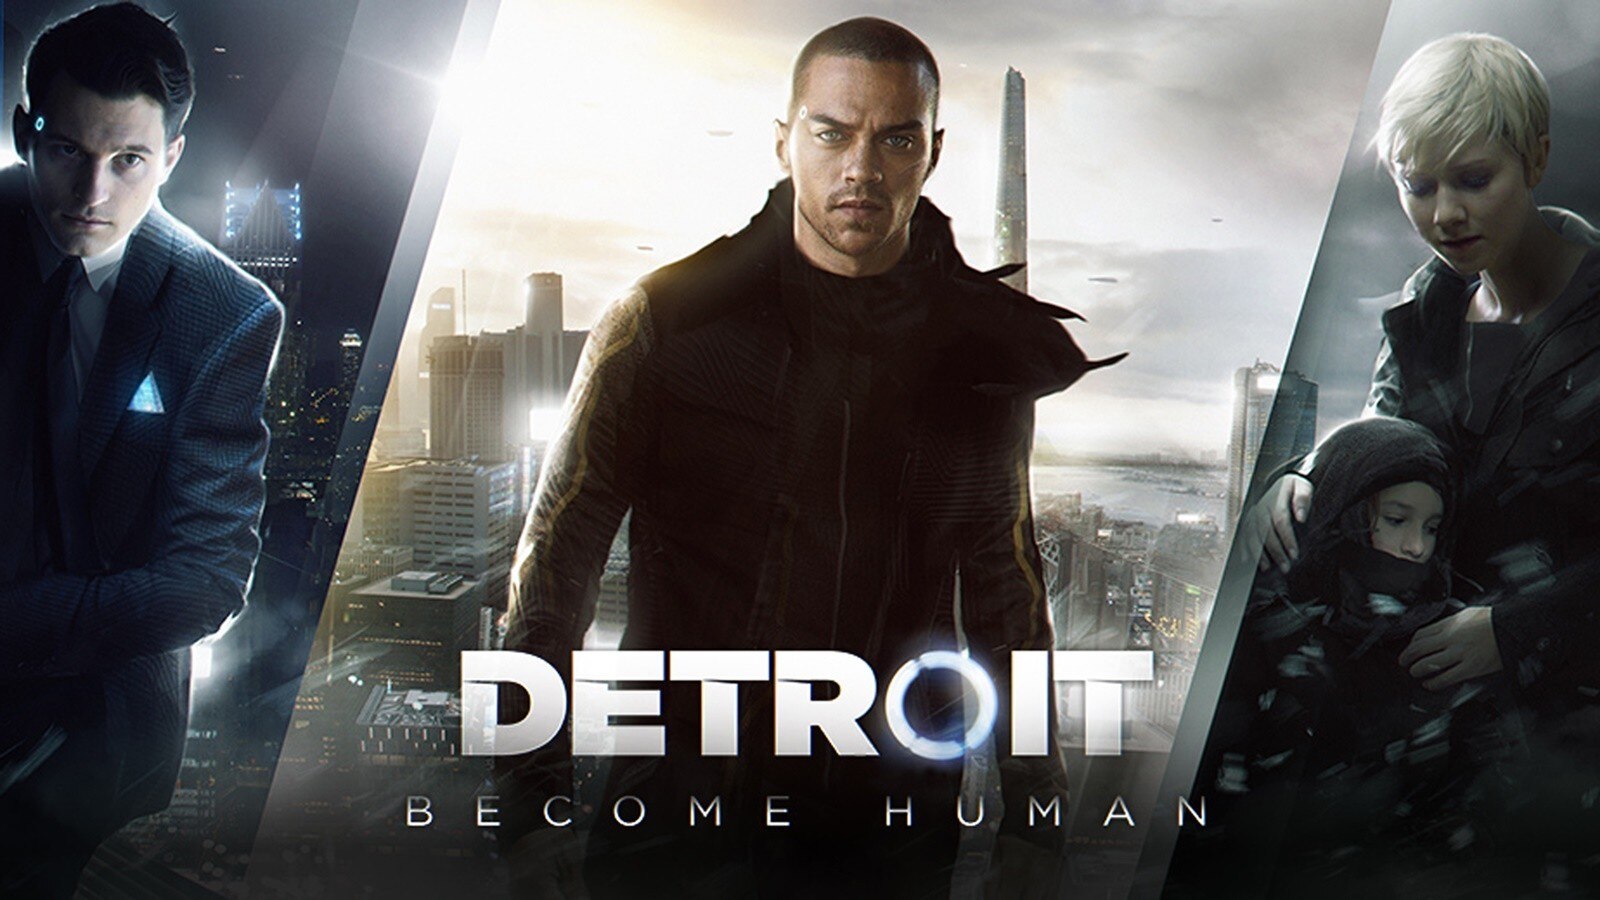 Detroit Become Human Markus Handmade Video Game Art Poster 